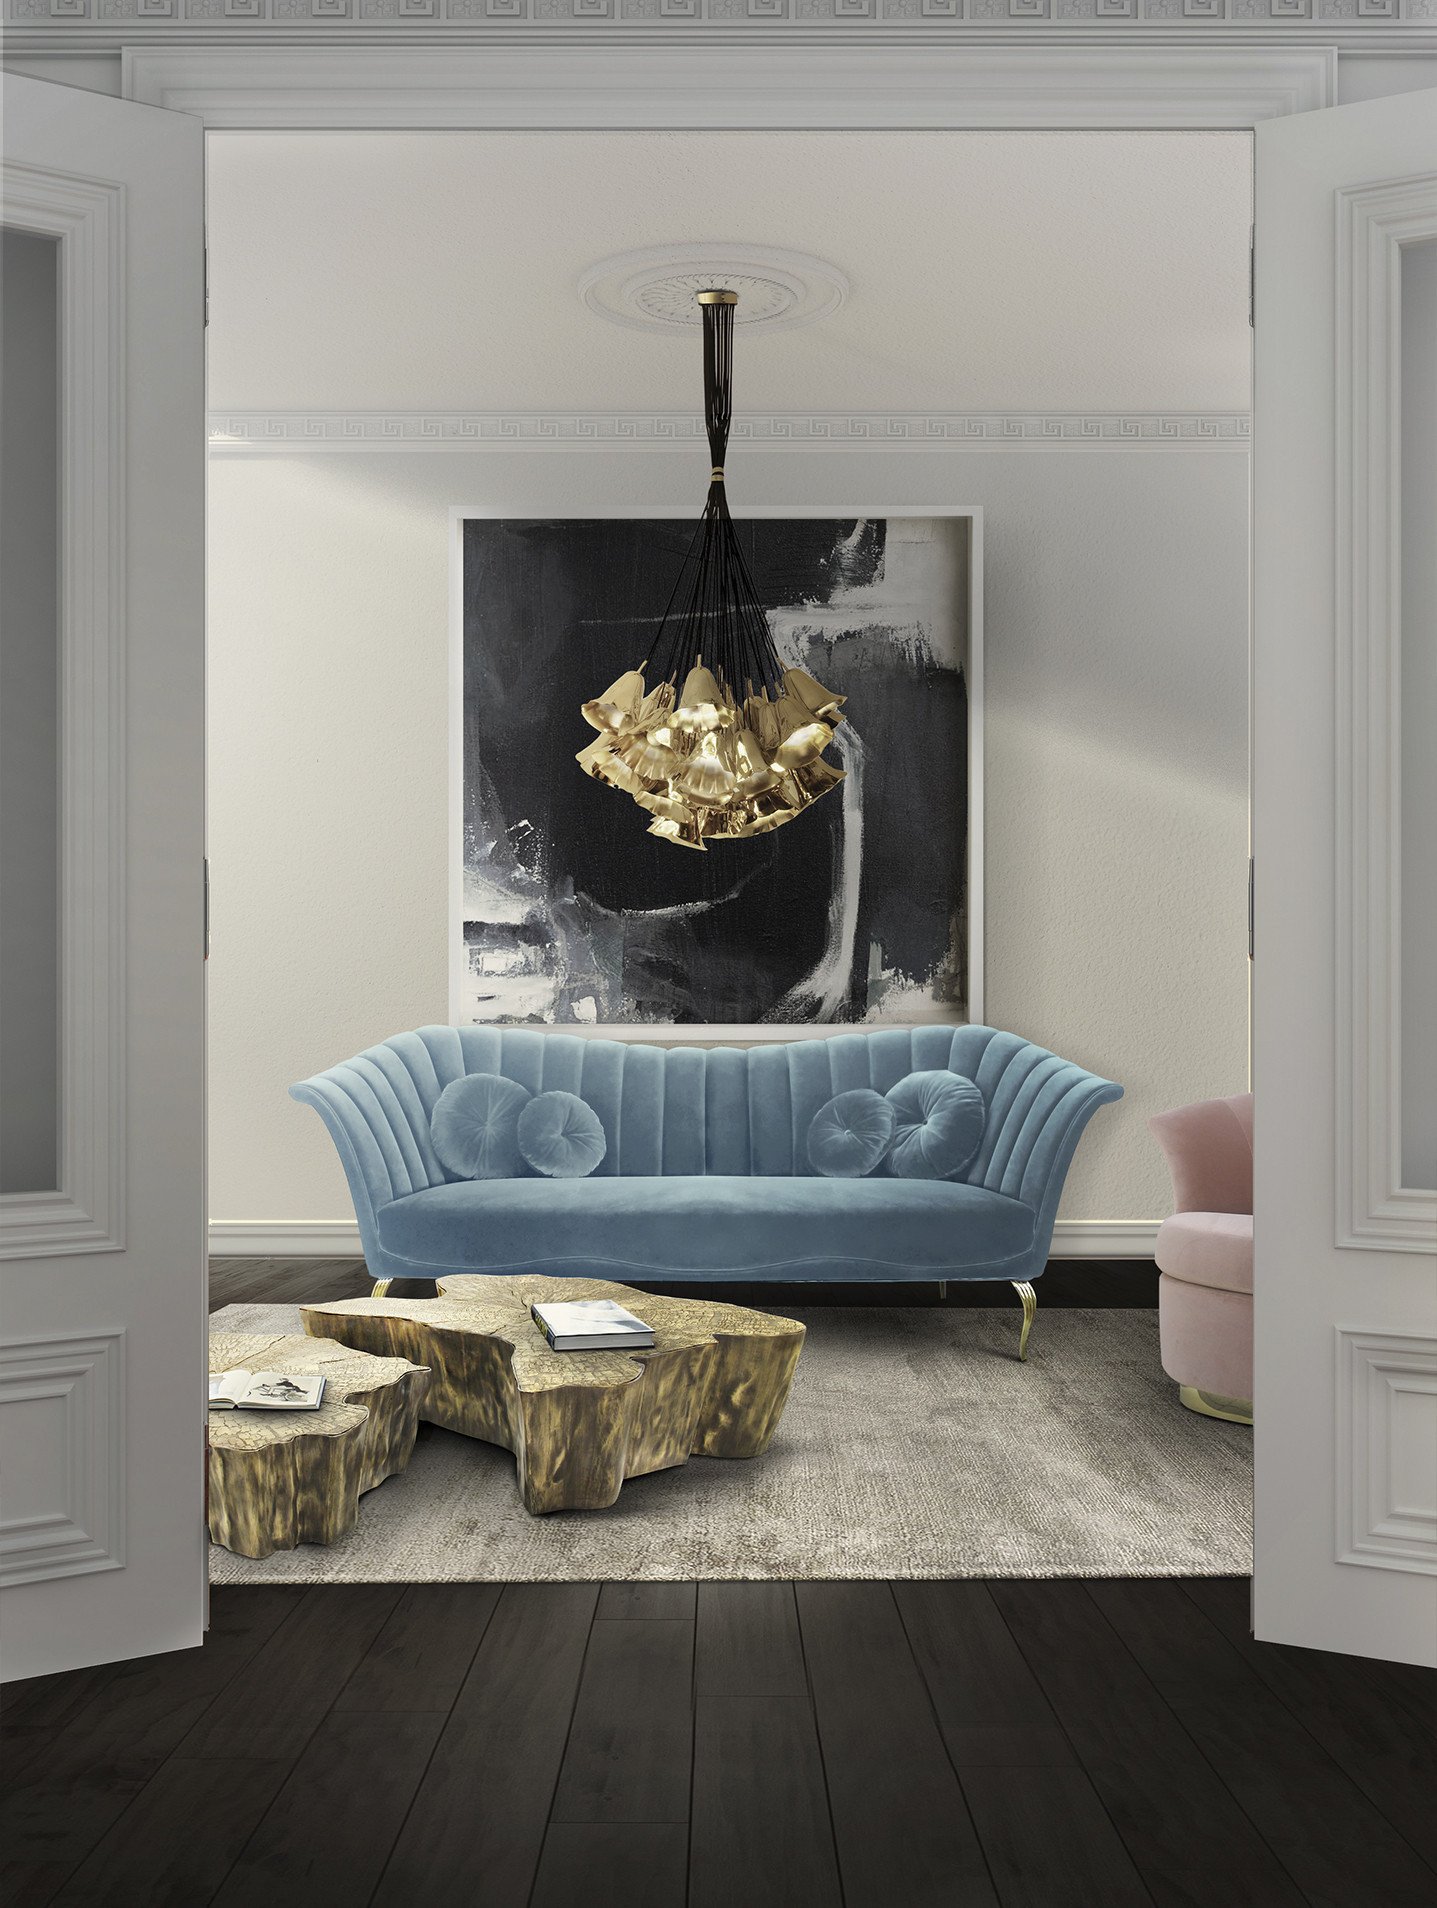 Mix and Match Bedroom Furniture Inspirational 16 Spectacular Gray Hardwood Floors Bedroom